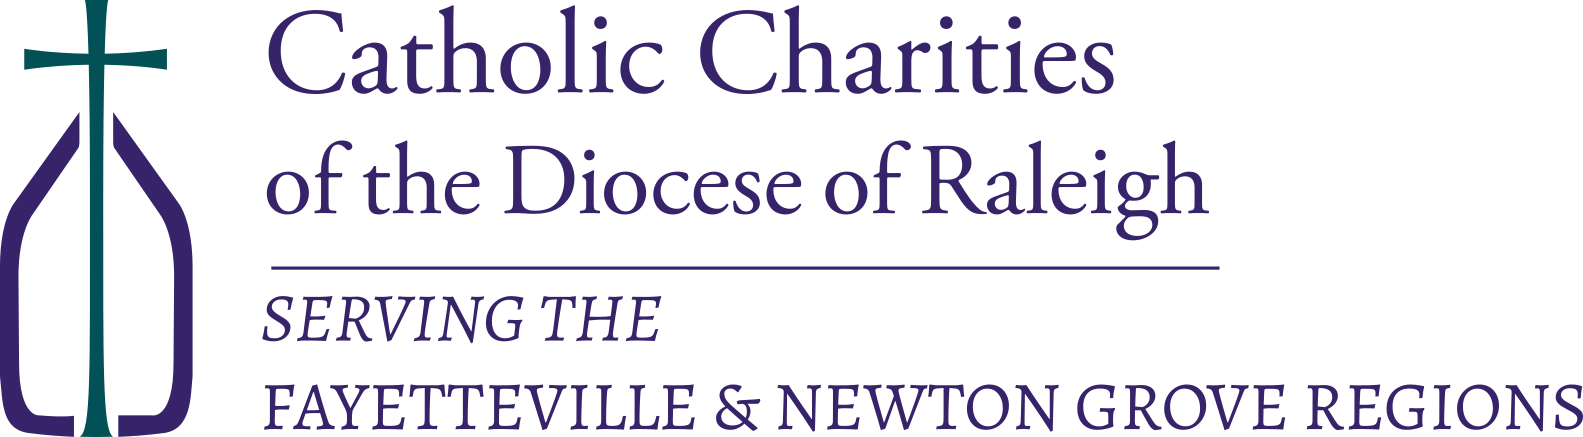 catholic charities fayetteville logo.png